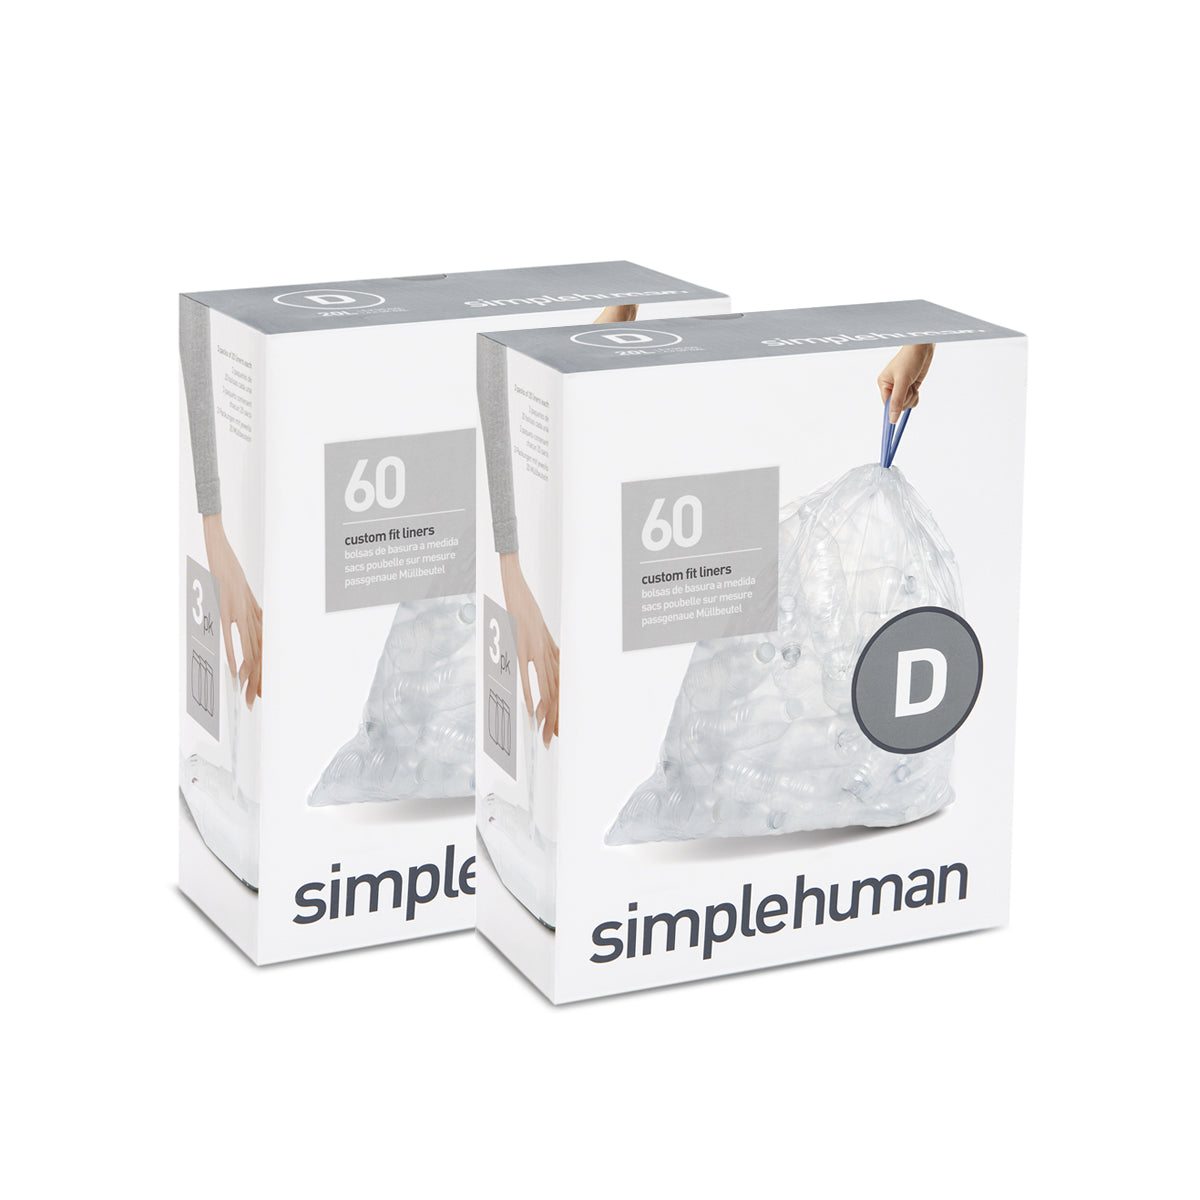 NEW simplehuman Code H Custom Fit Liners, 60 Trash Bags